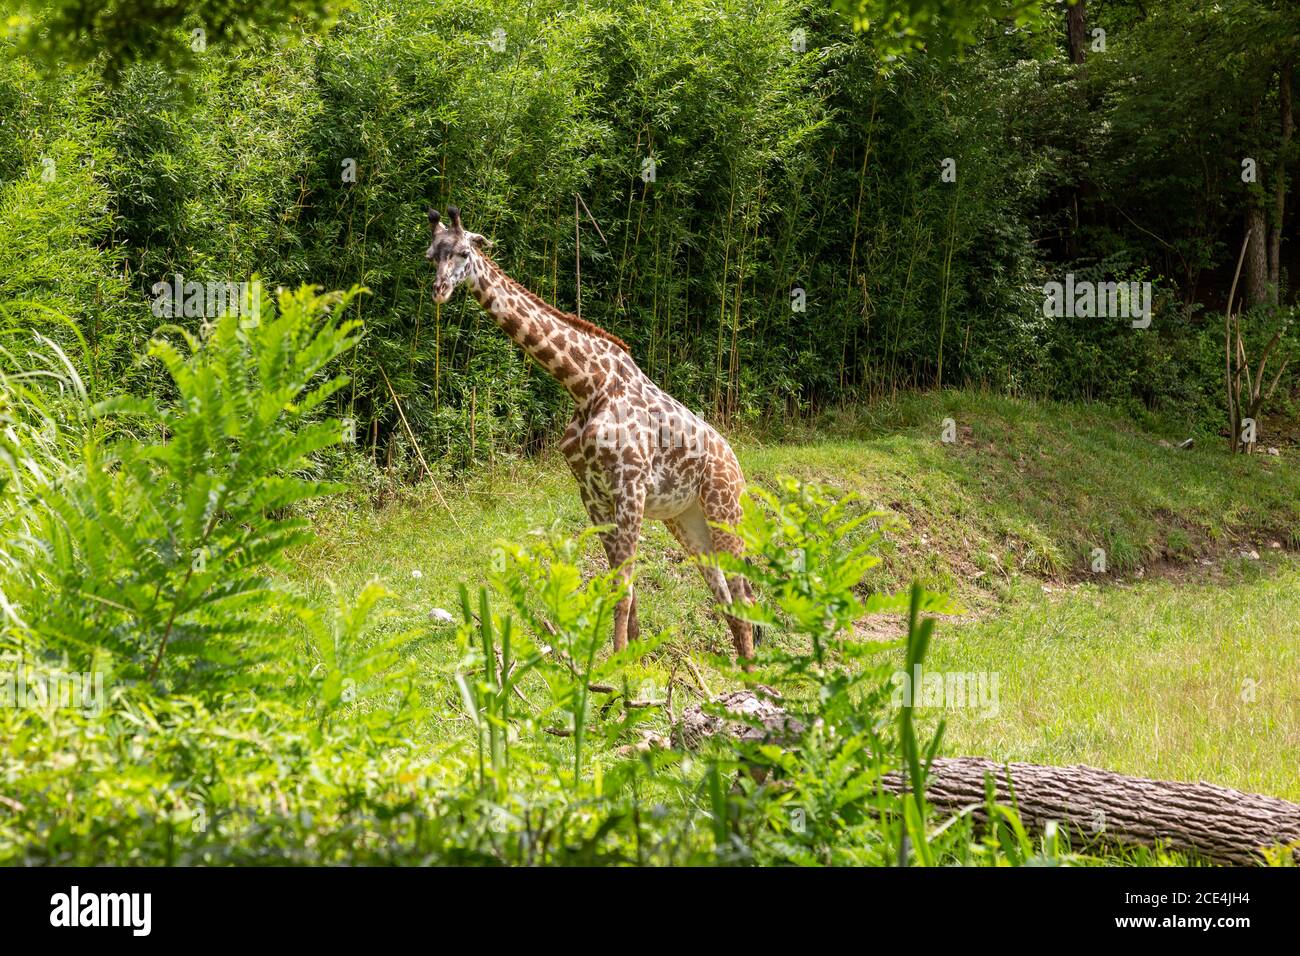 A giraffe walks through his enclosure at the Cincinnati Zoo. Stock Photo